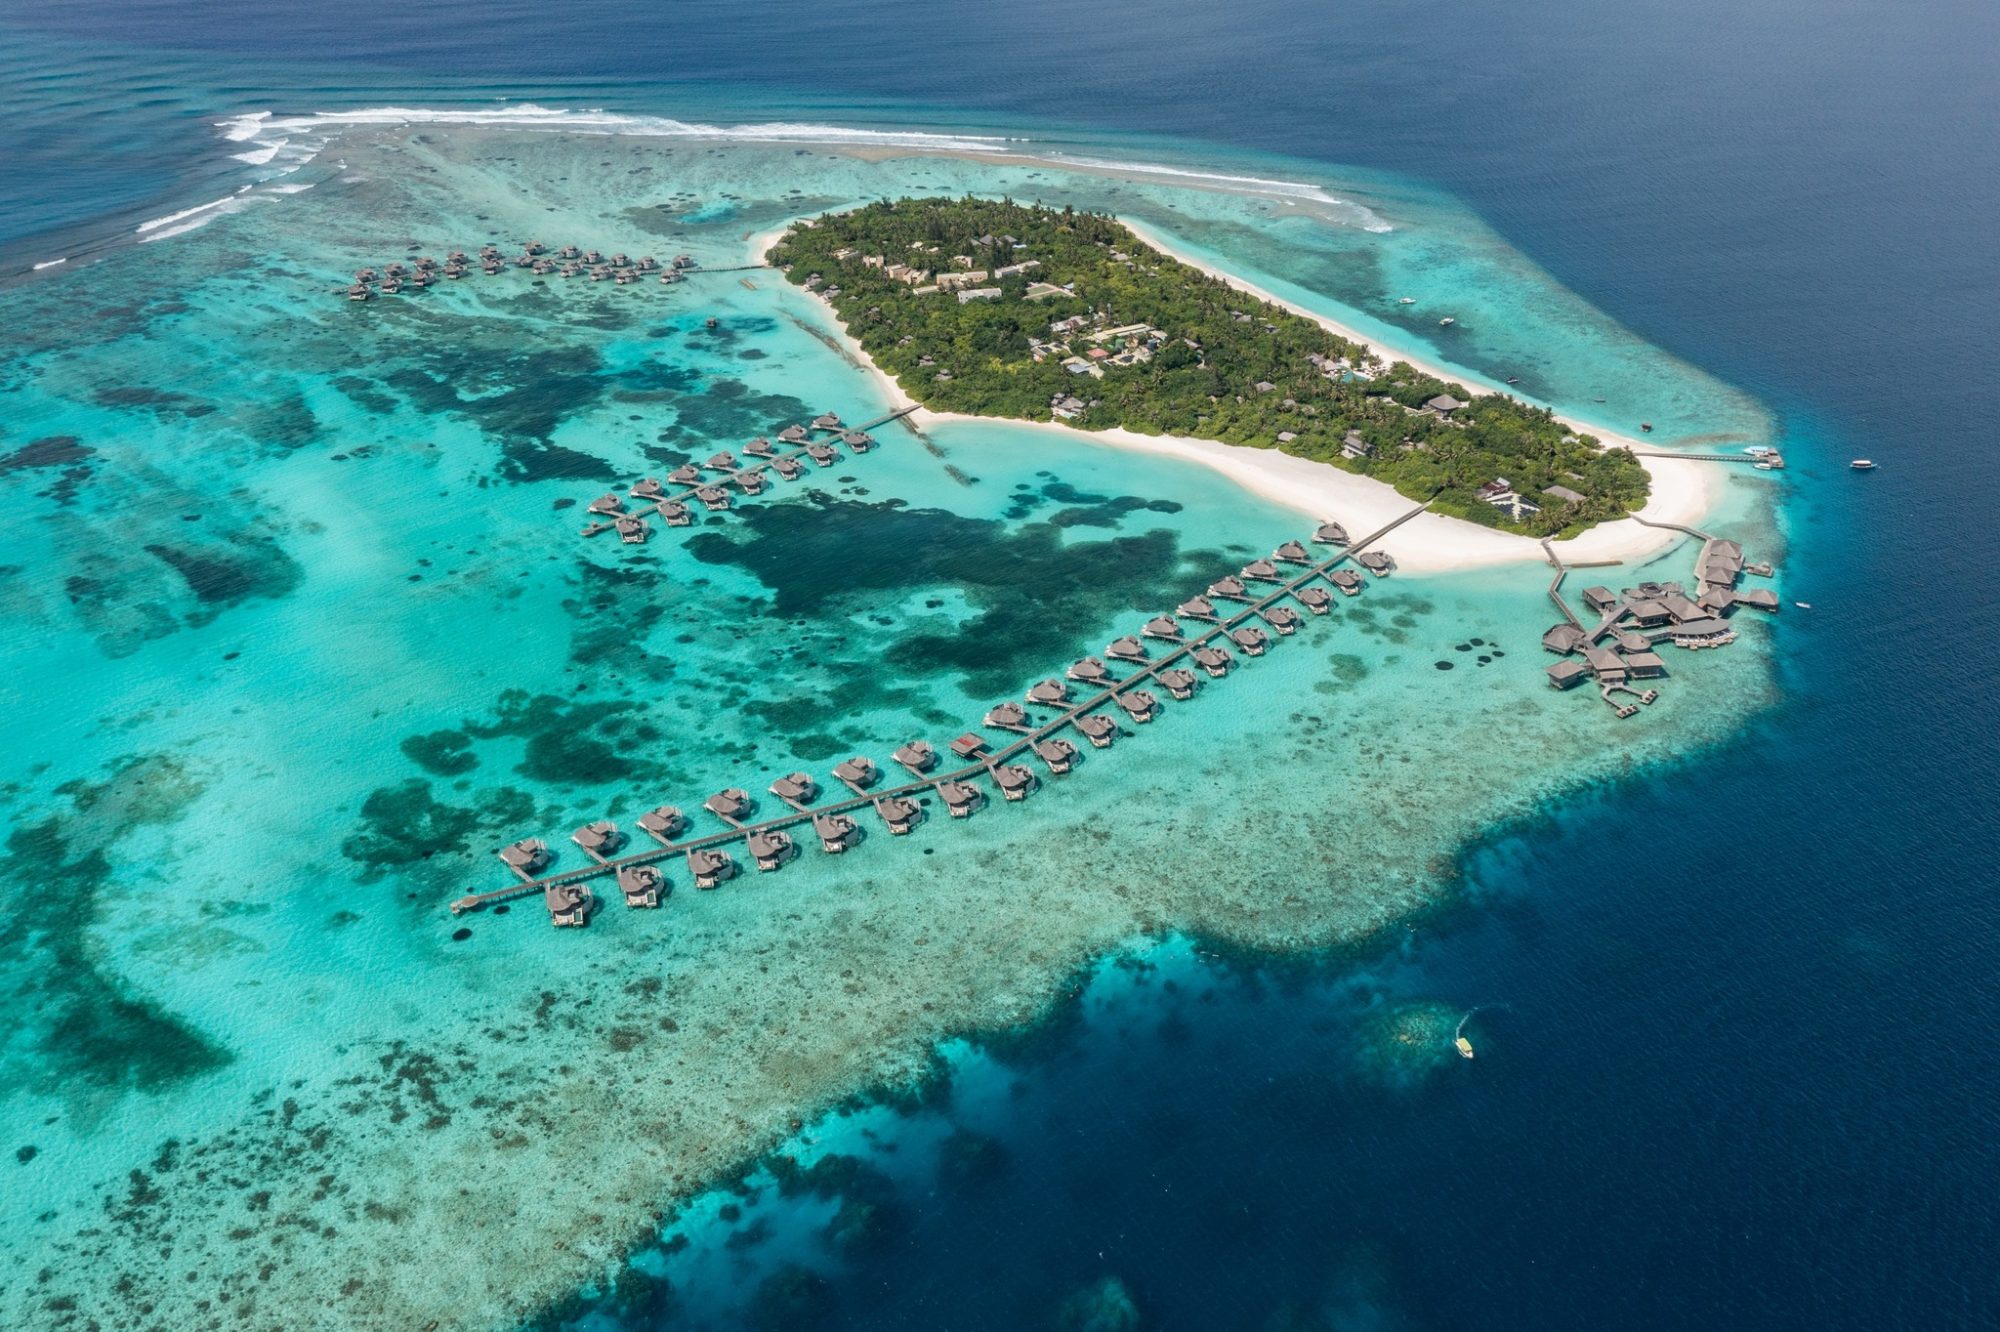 Six Senses Laamu: An atoll utopia where sumptuous meets sustainable